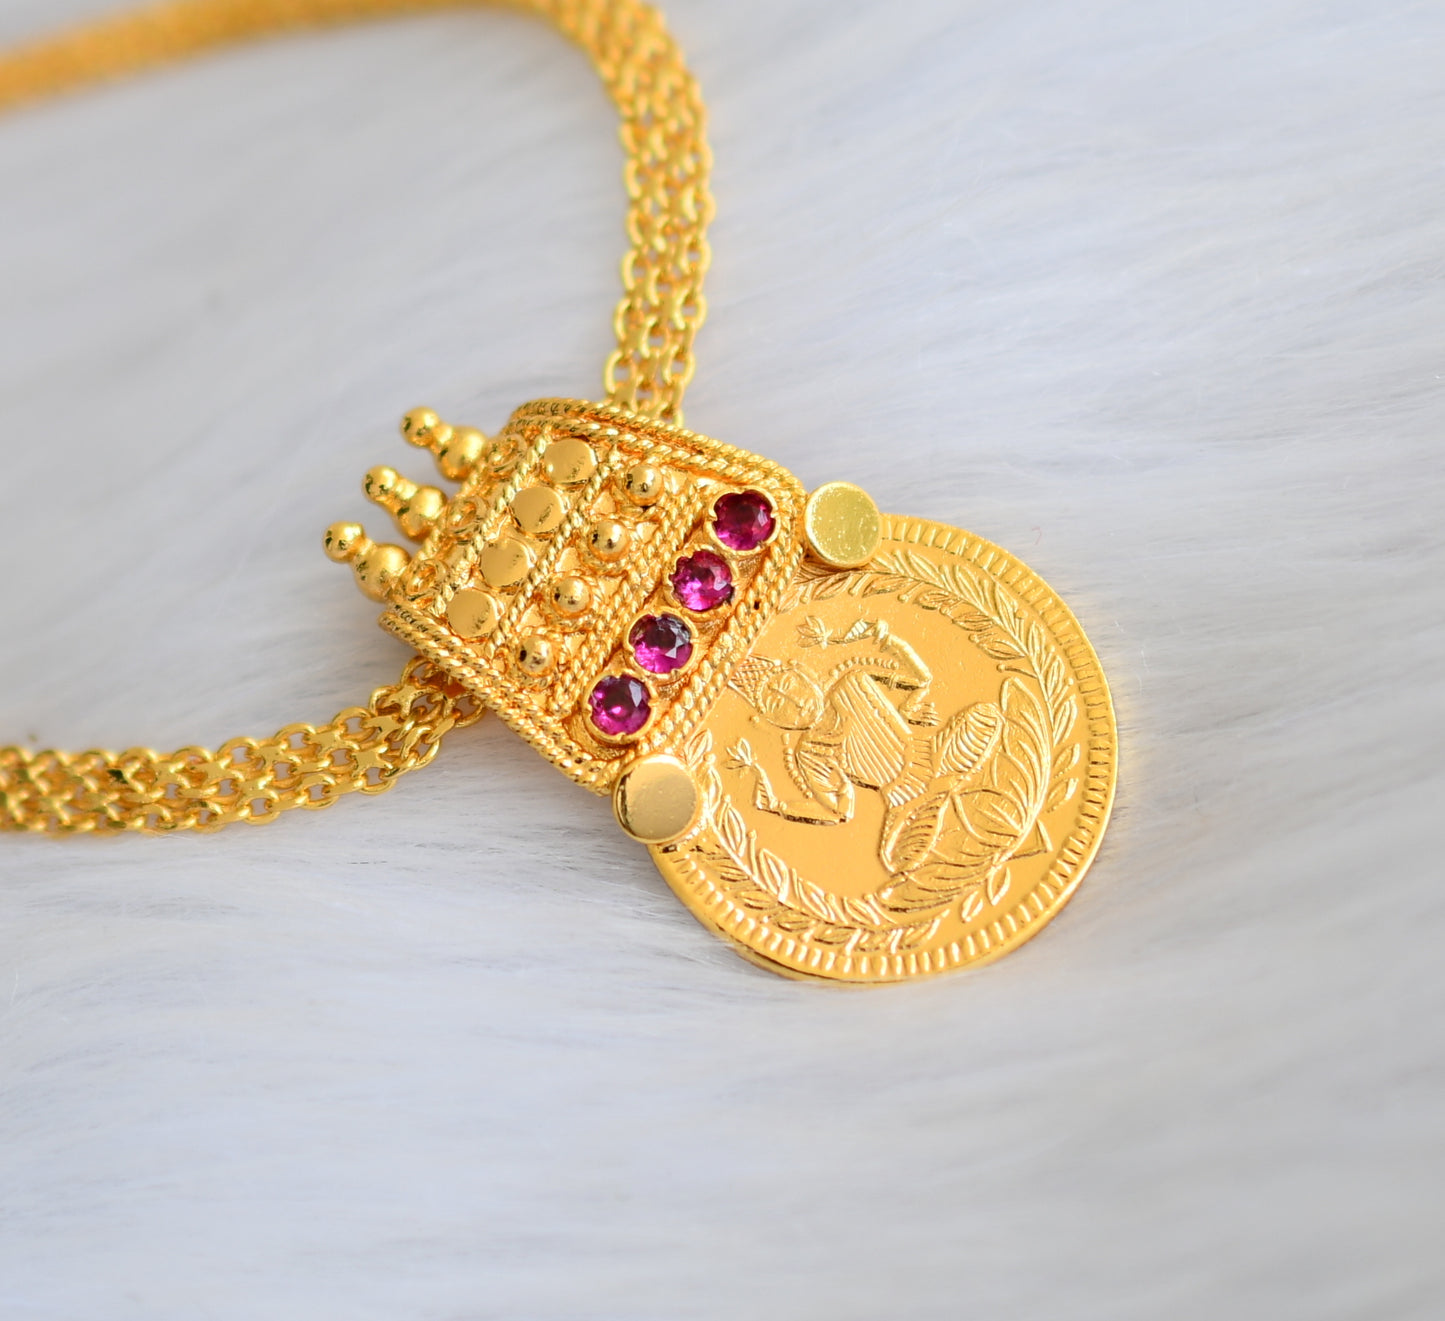 Gold tone AD pink stone Lakshmi coin pendant Kerala style necklace dj-39361